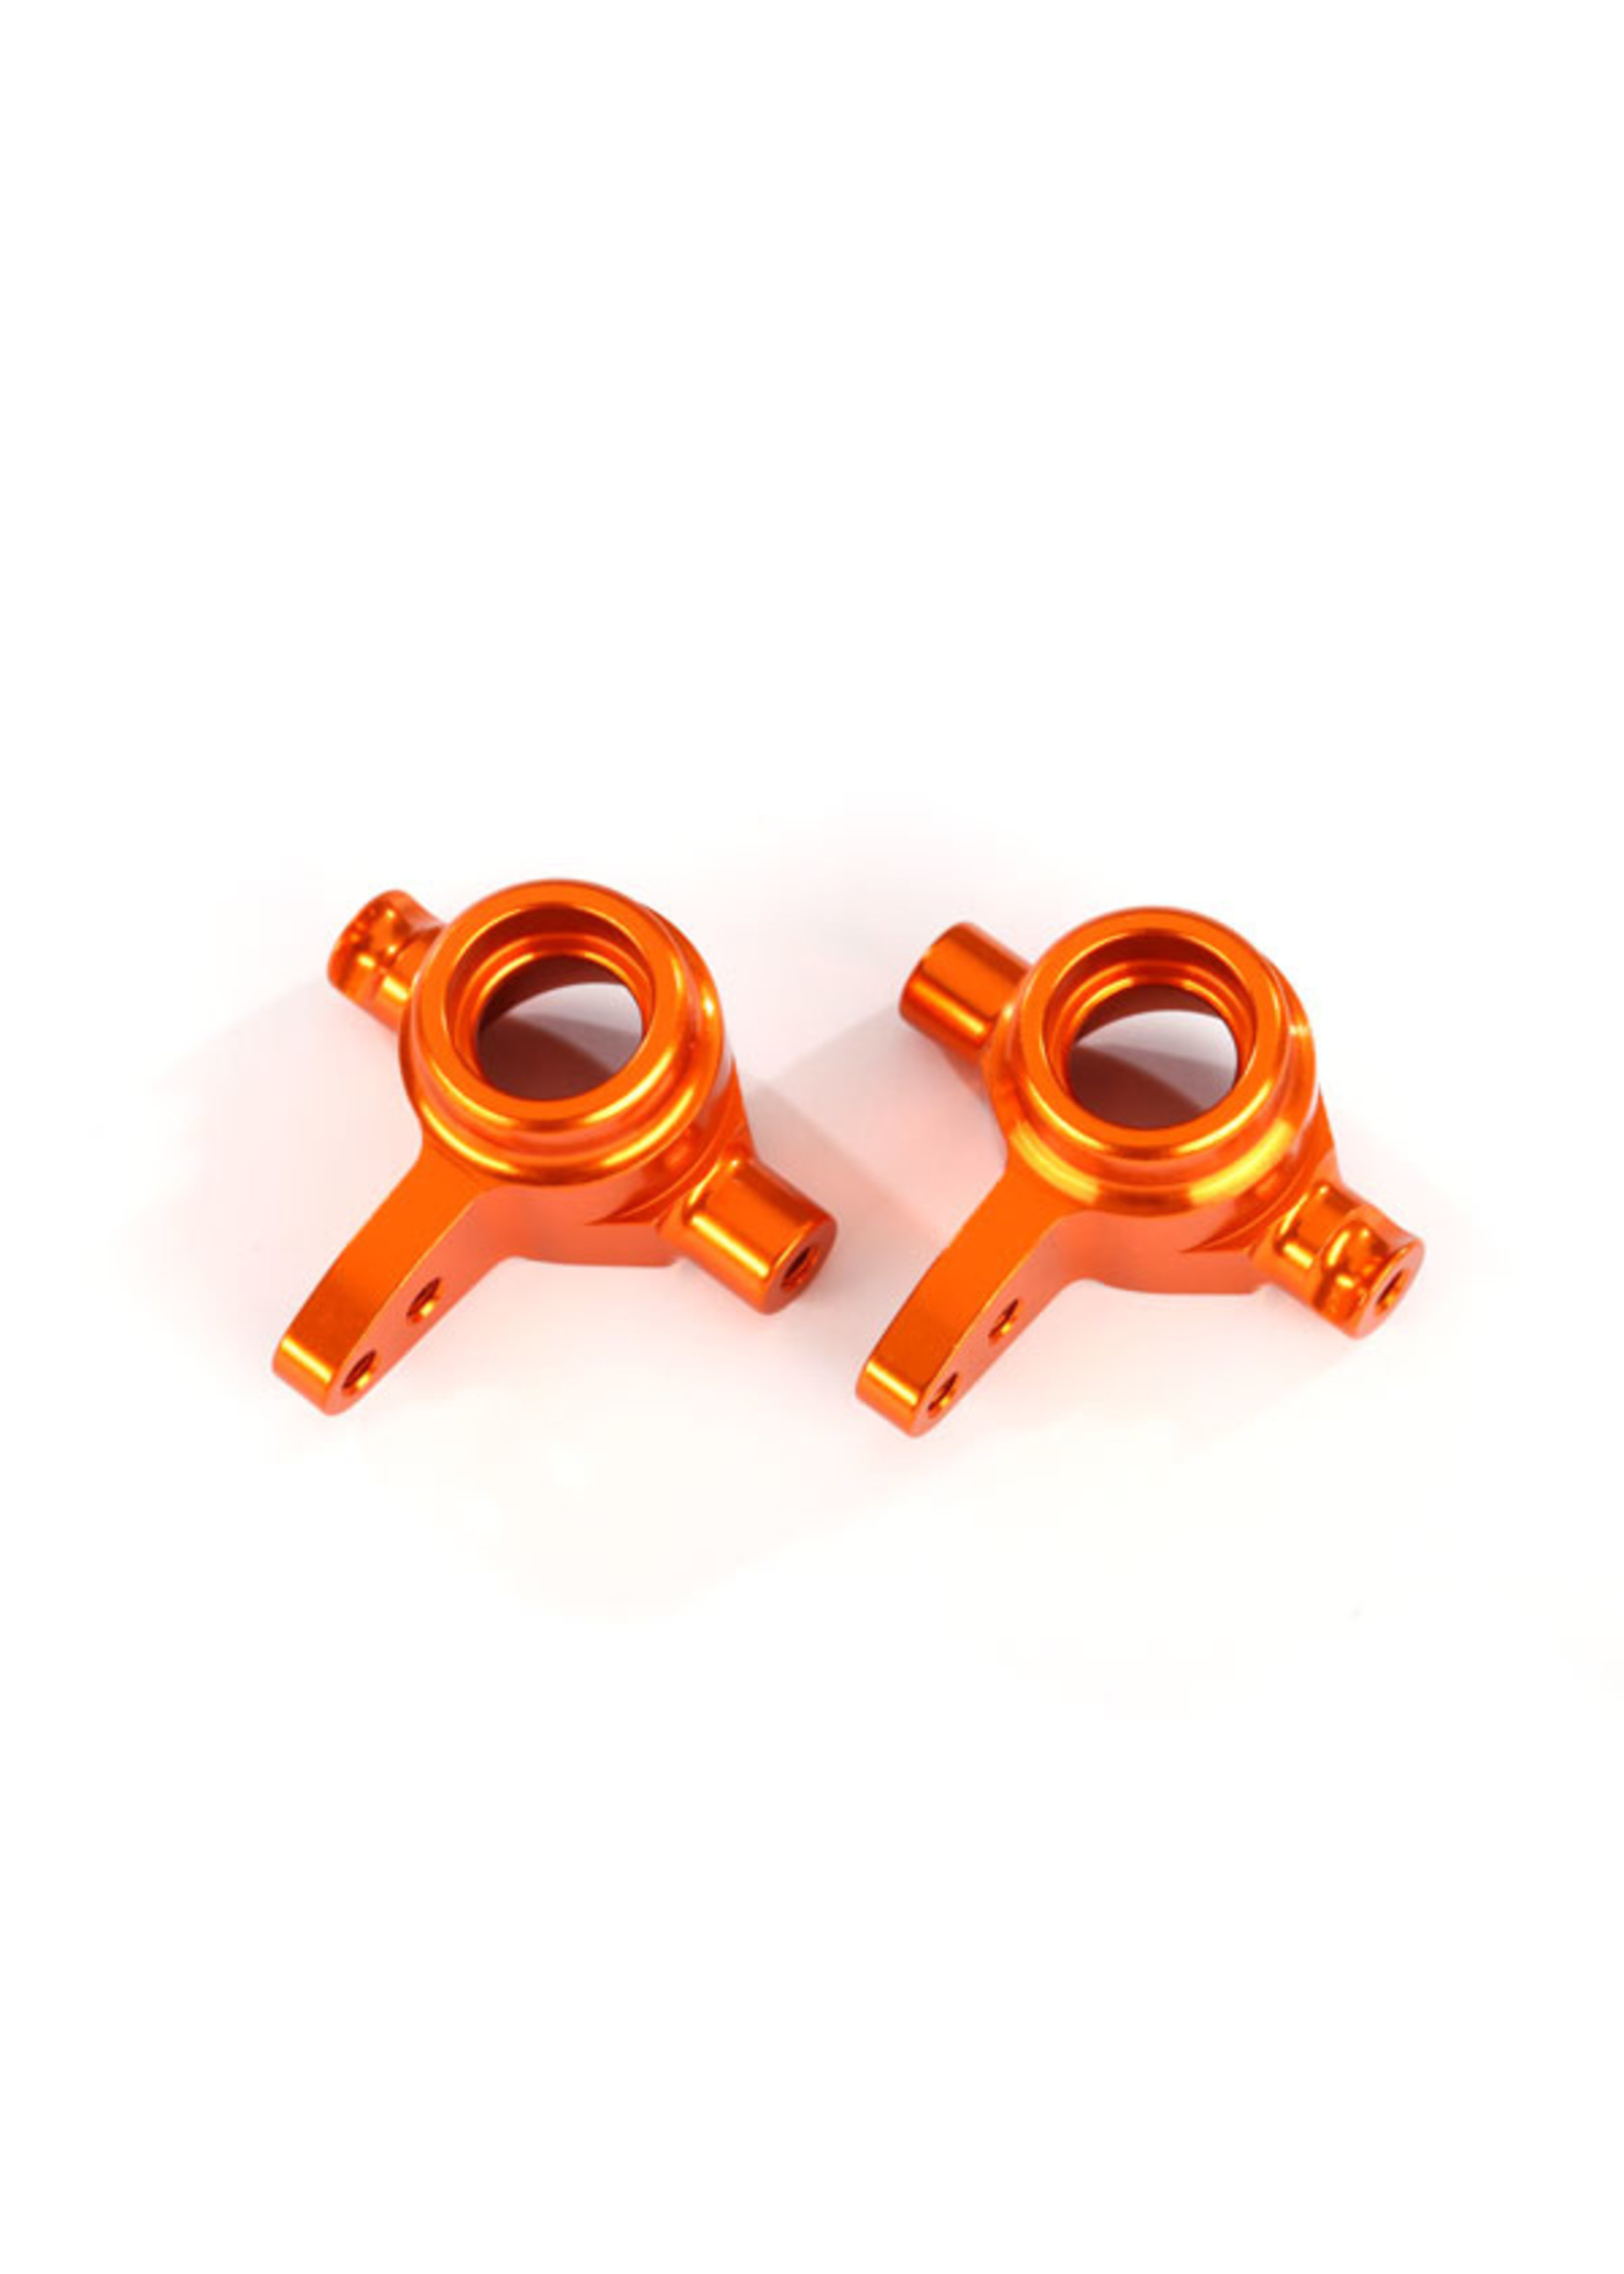 Traxxas 6837A - Aluminum Steering Blocks - Orange